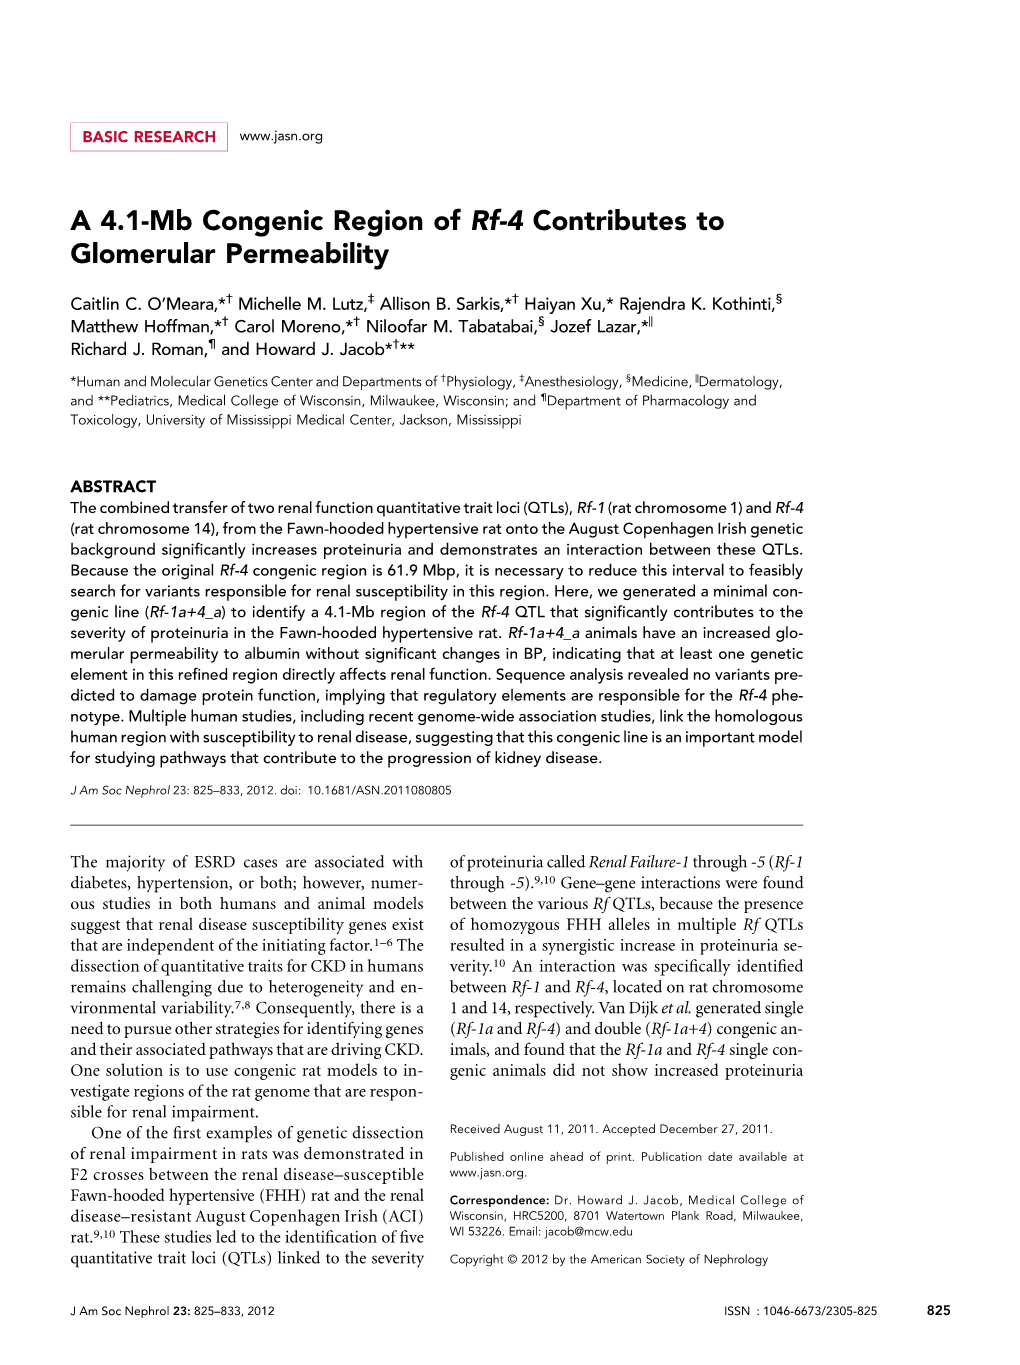 A 4.1-Mb Congenic Region of Rf-4 Contributes to Glomerular Permeability